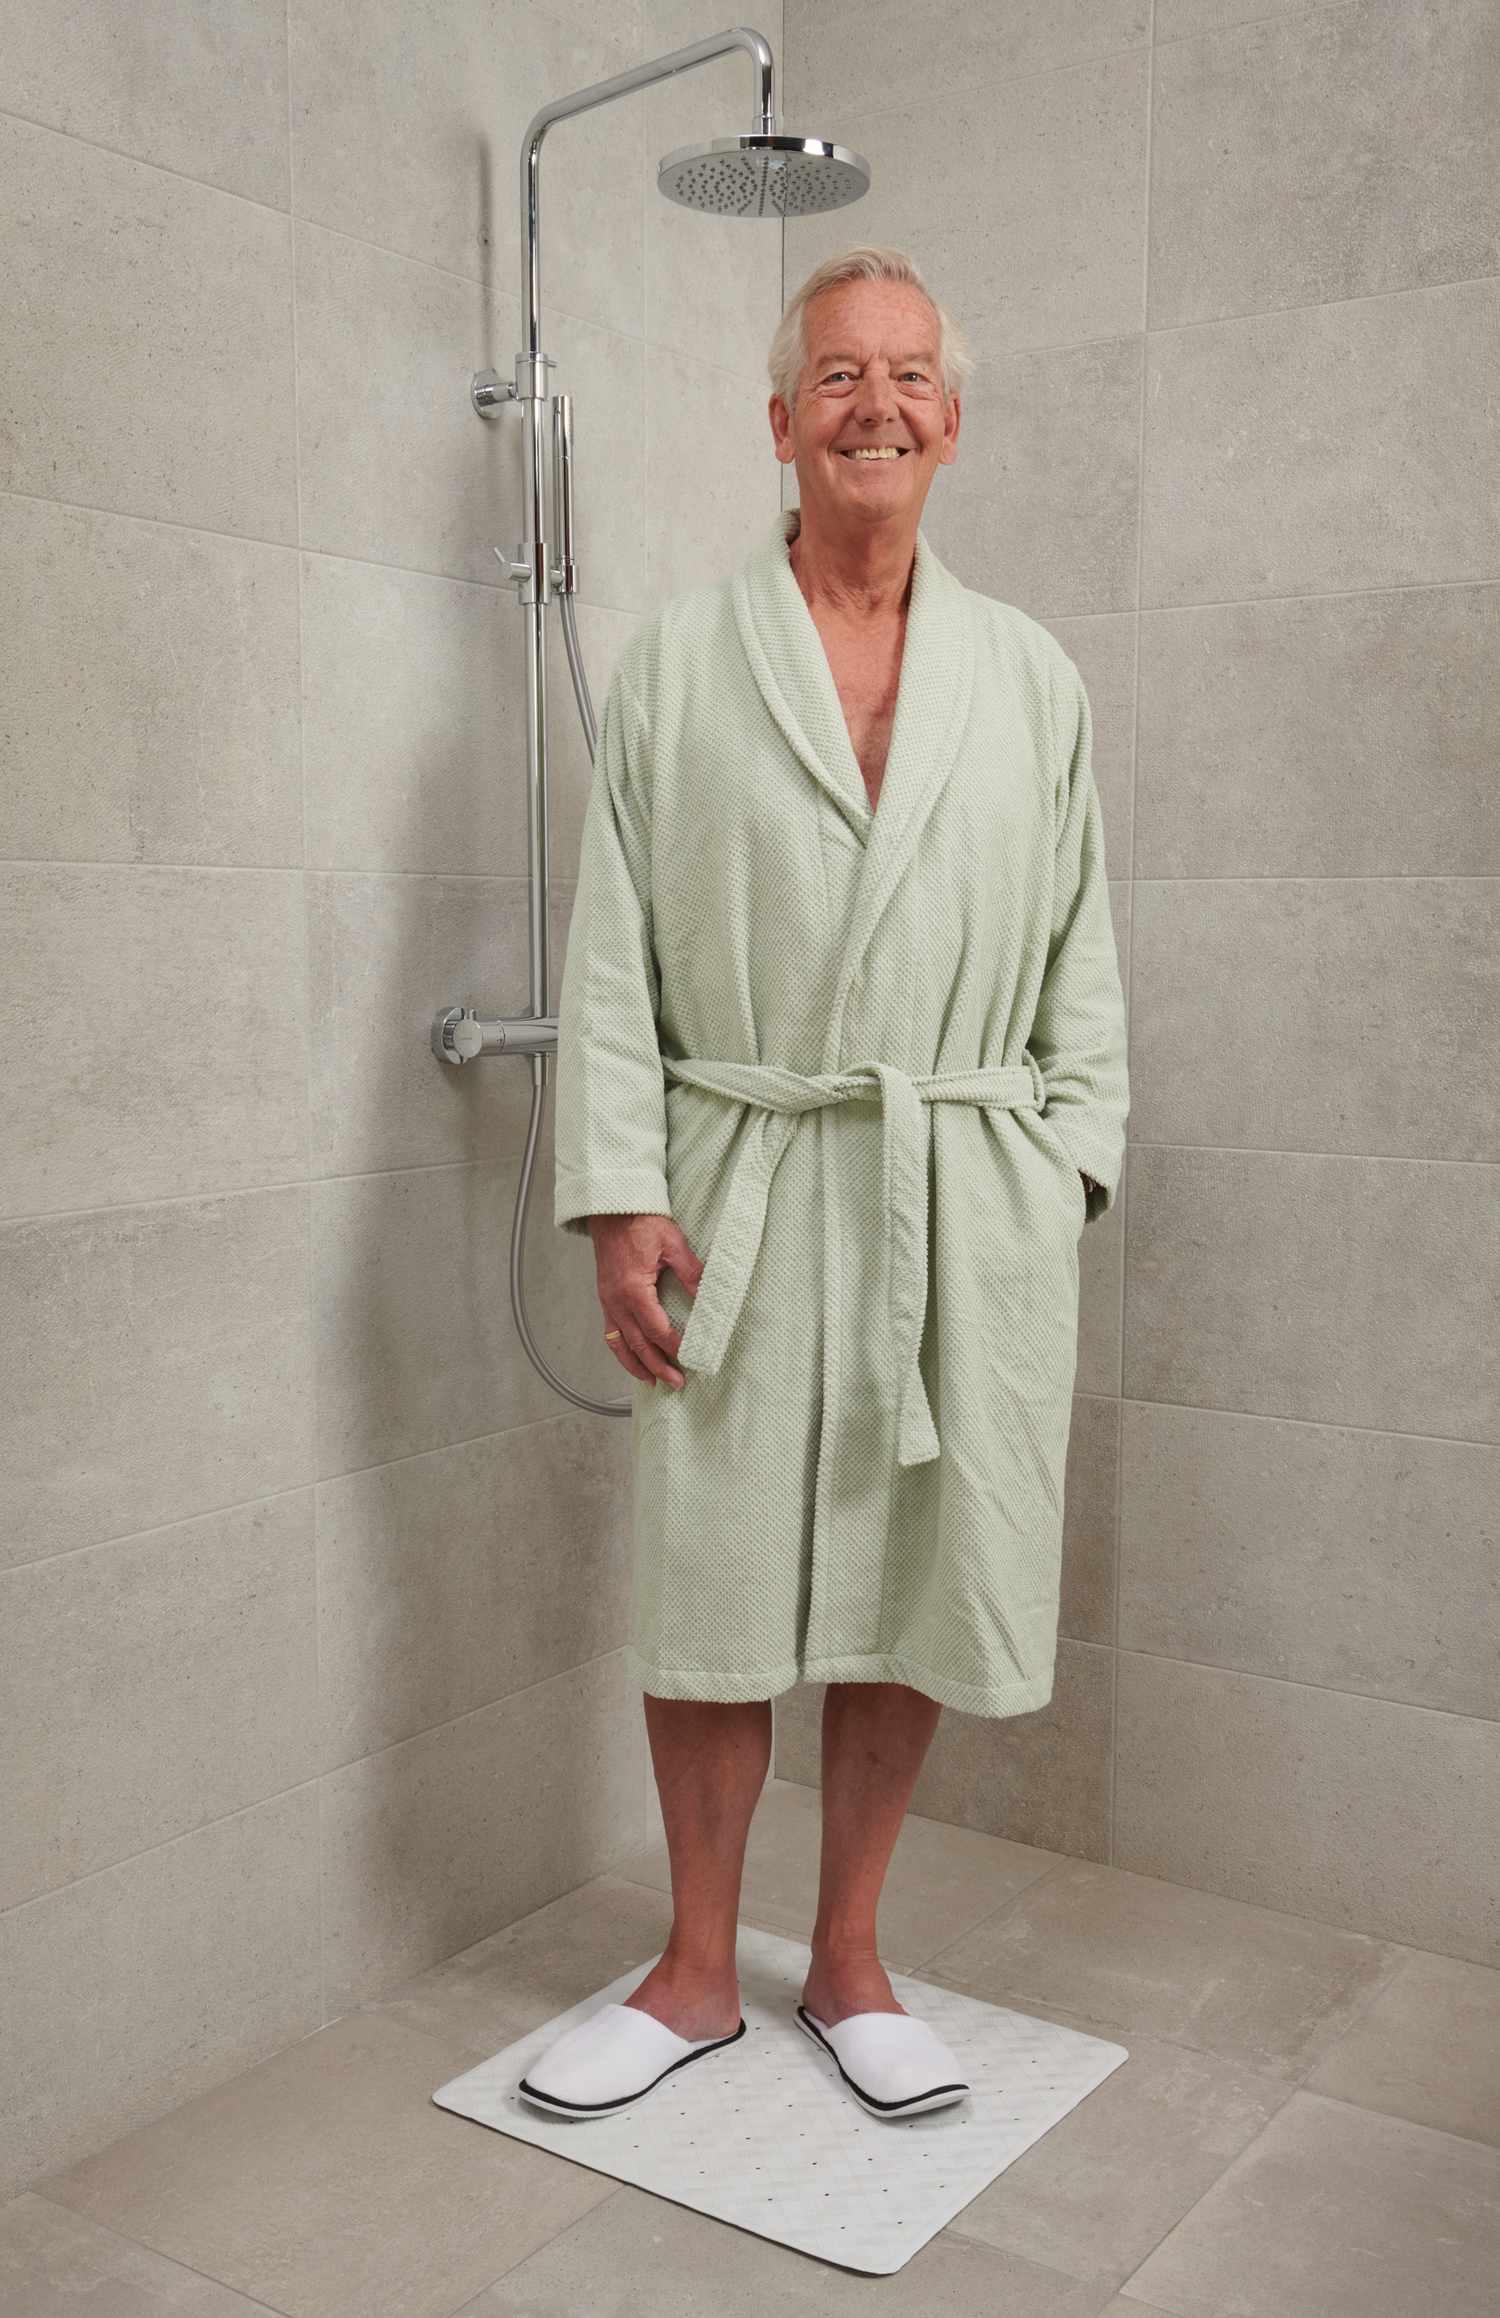 SecuCare Anti-slip shower mat